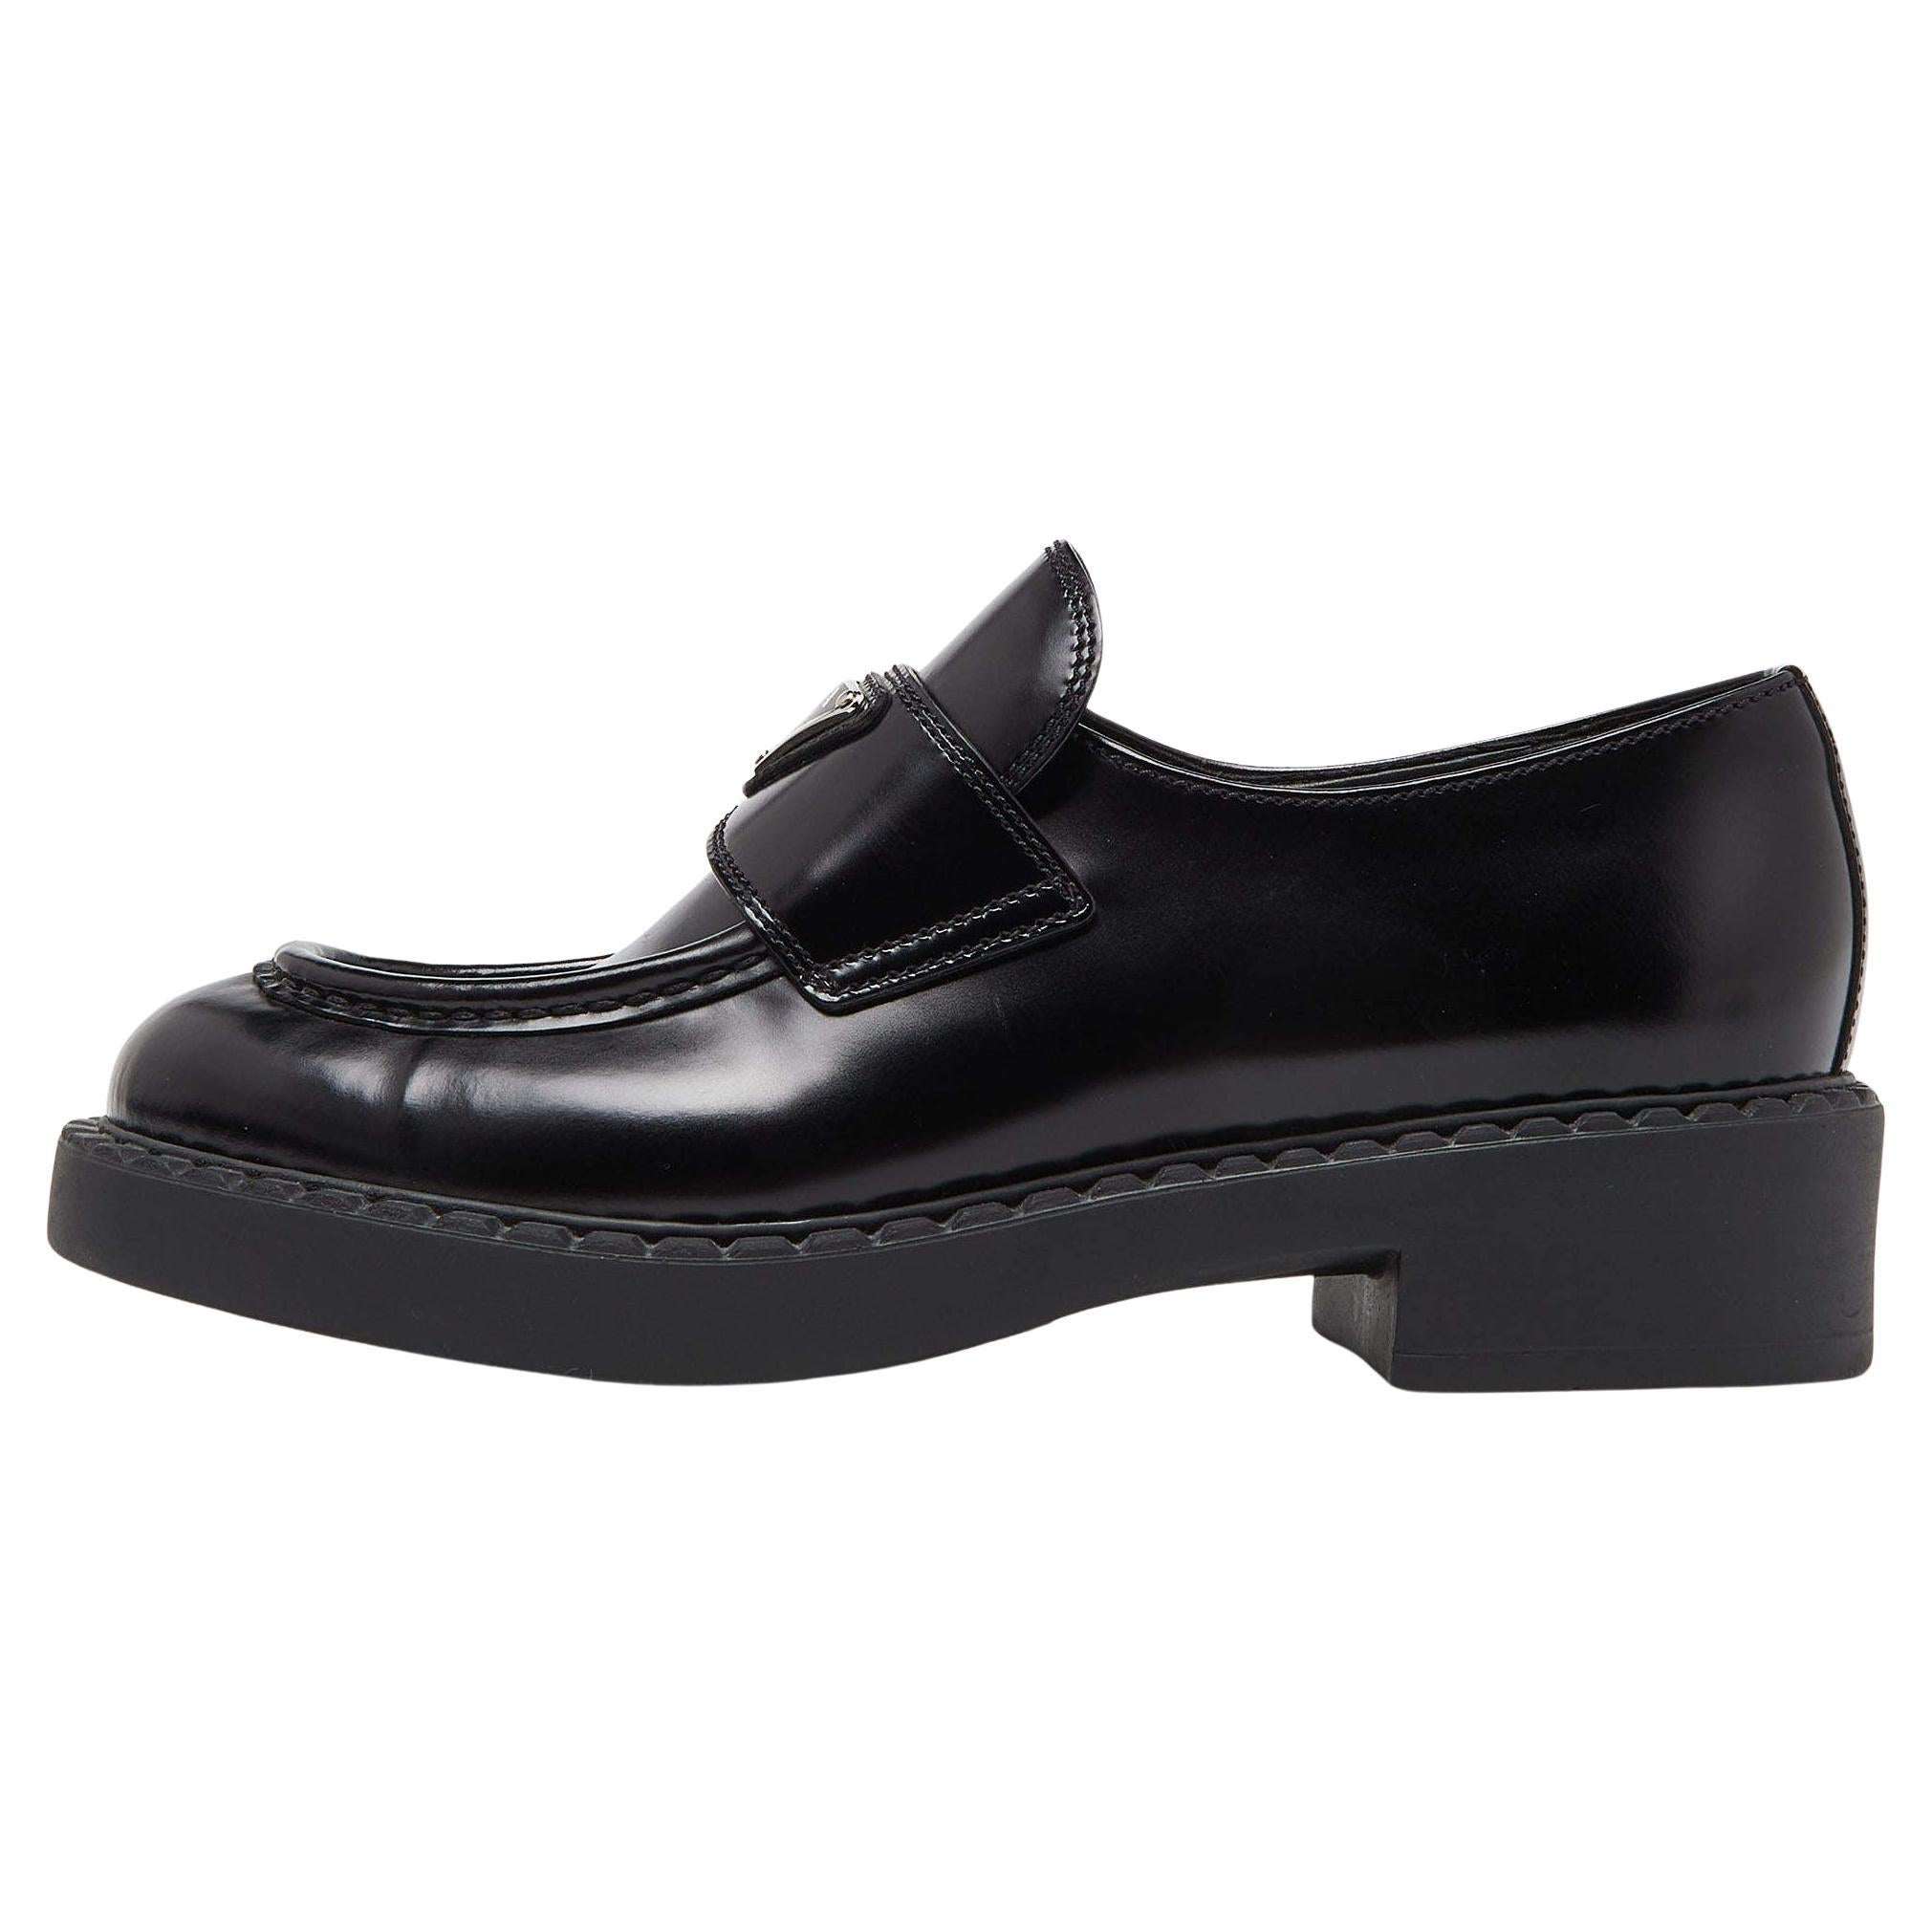 Prada Black Patent Leather Platform Loafers Size 36.5